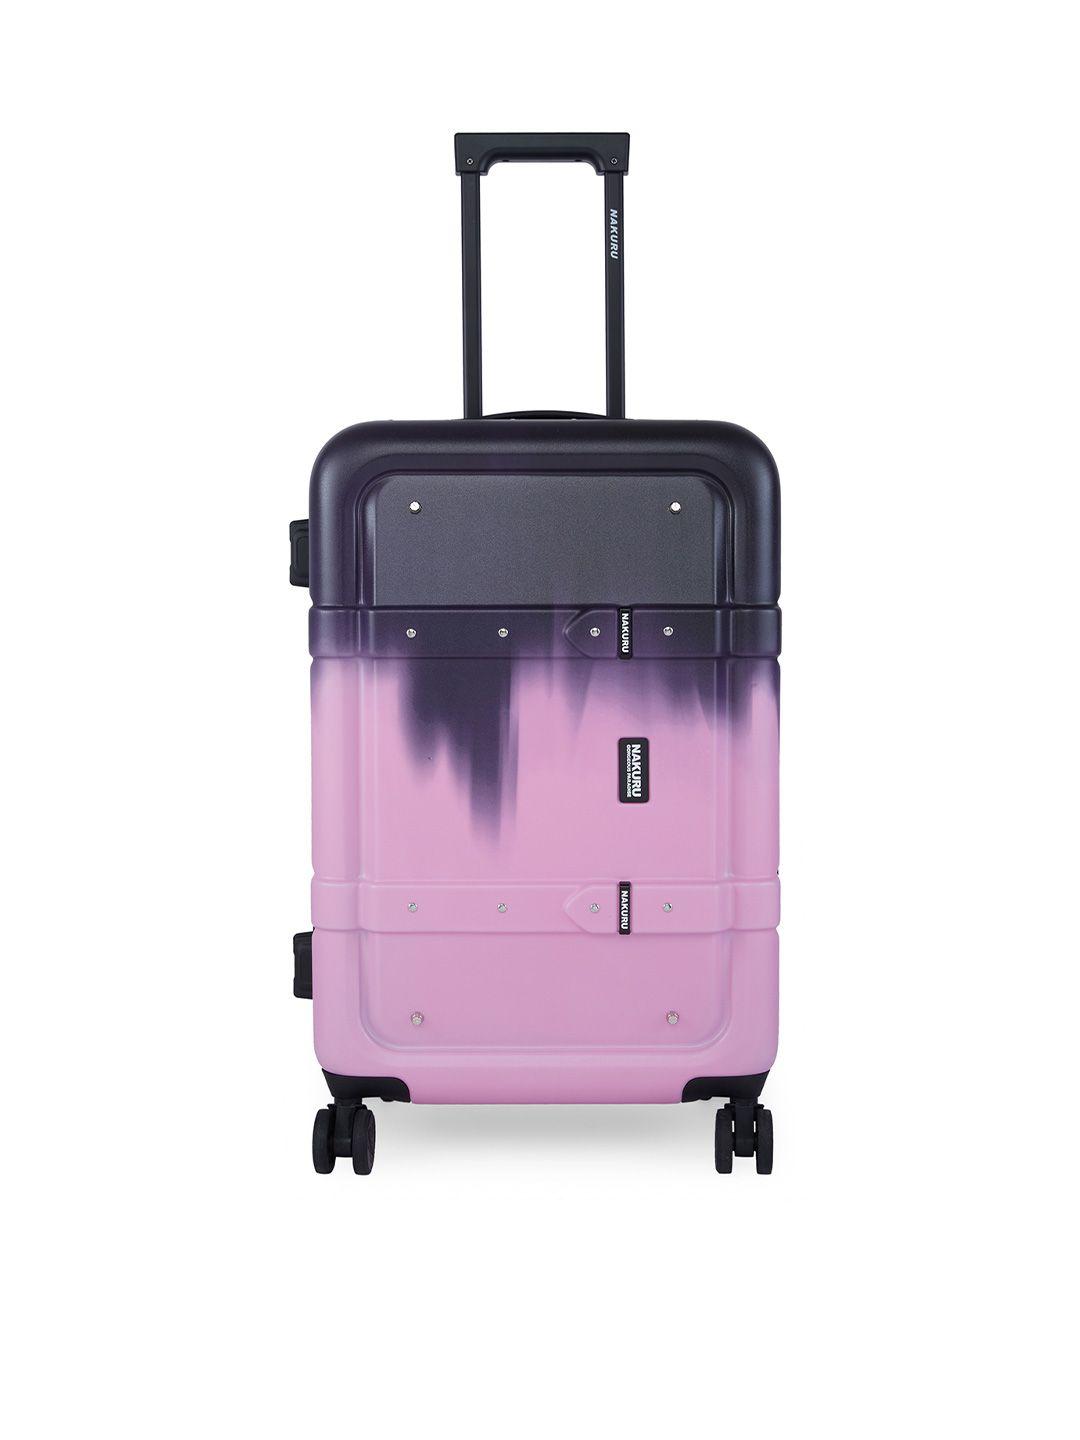 nakuru 2141 range purple color hard trolley suitcase- medium